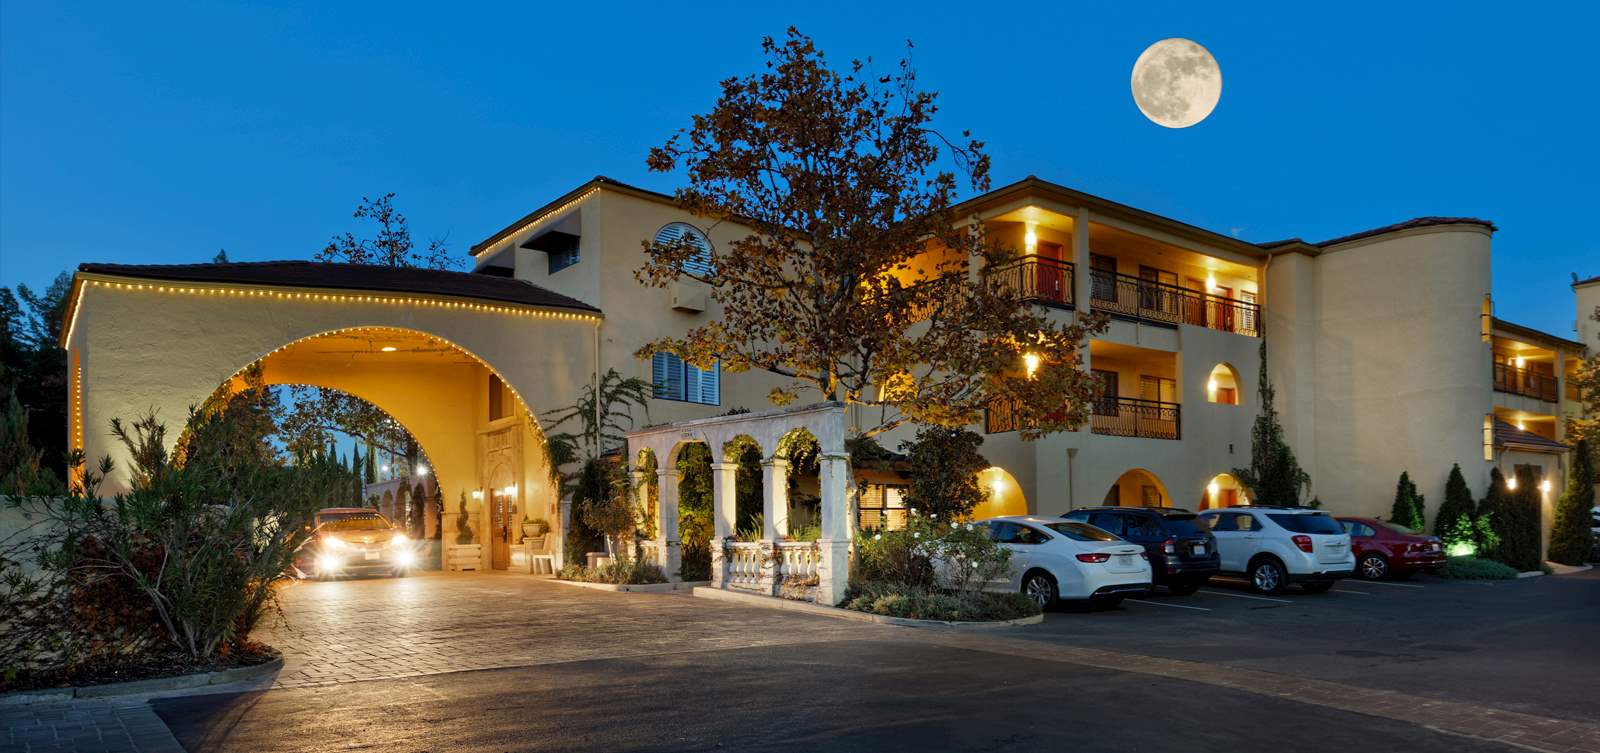 A Tuscan-Inspired Hotel In Healdsburg, Ca - Best Western Dry Creek Inn - Map Of Best Western Hotels In California